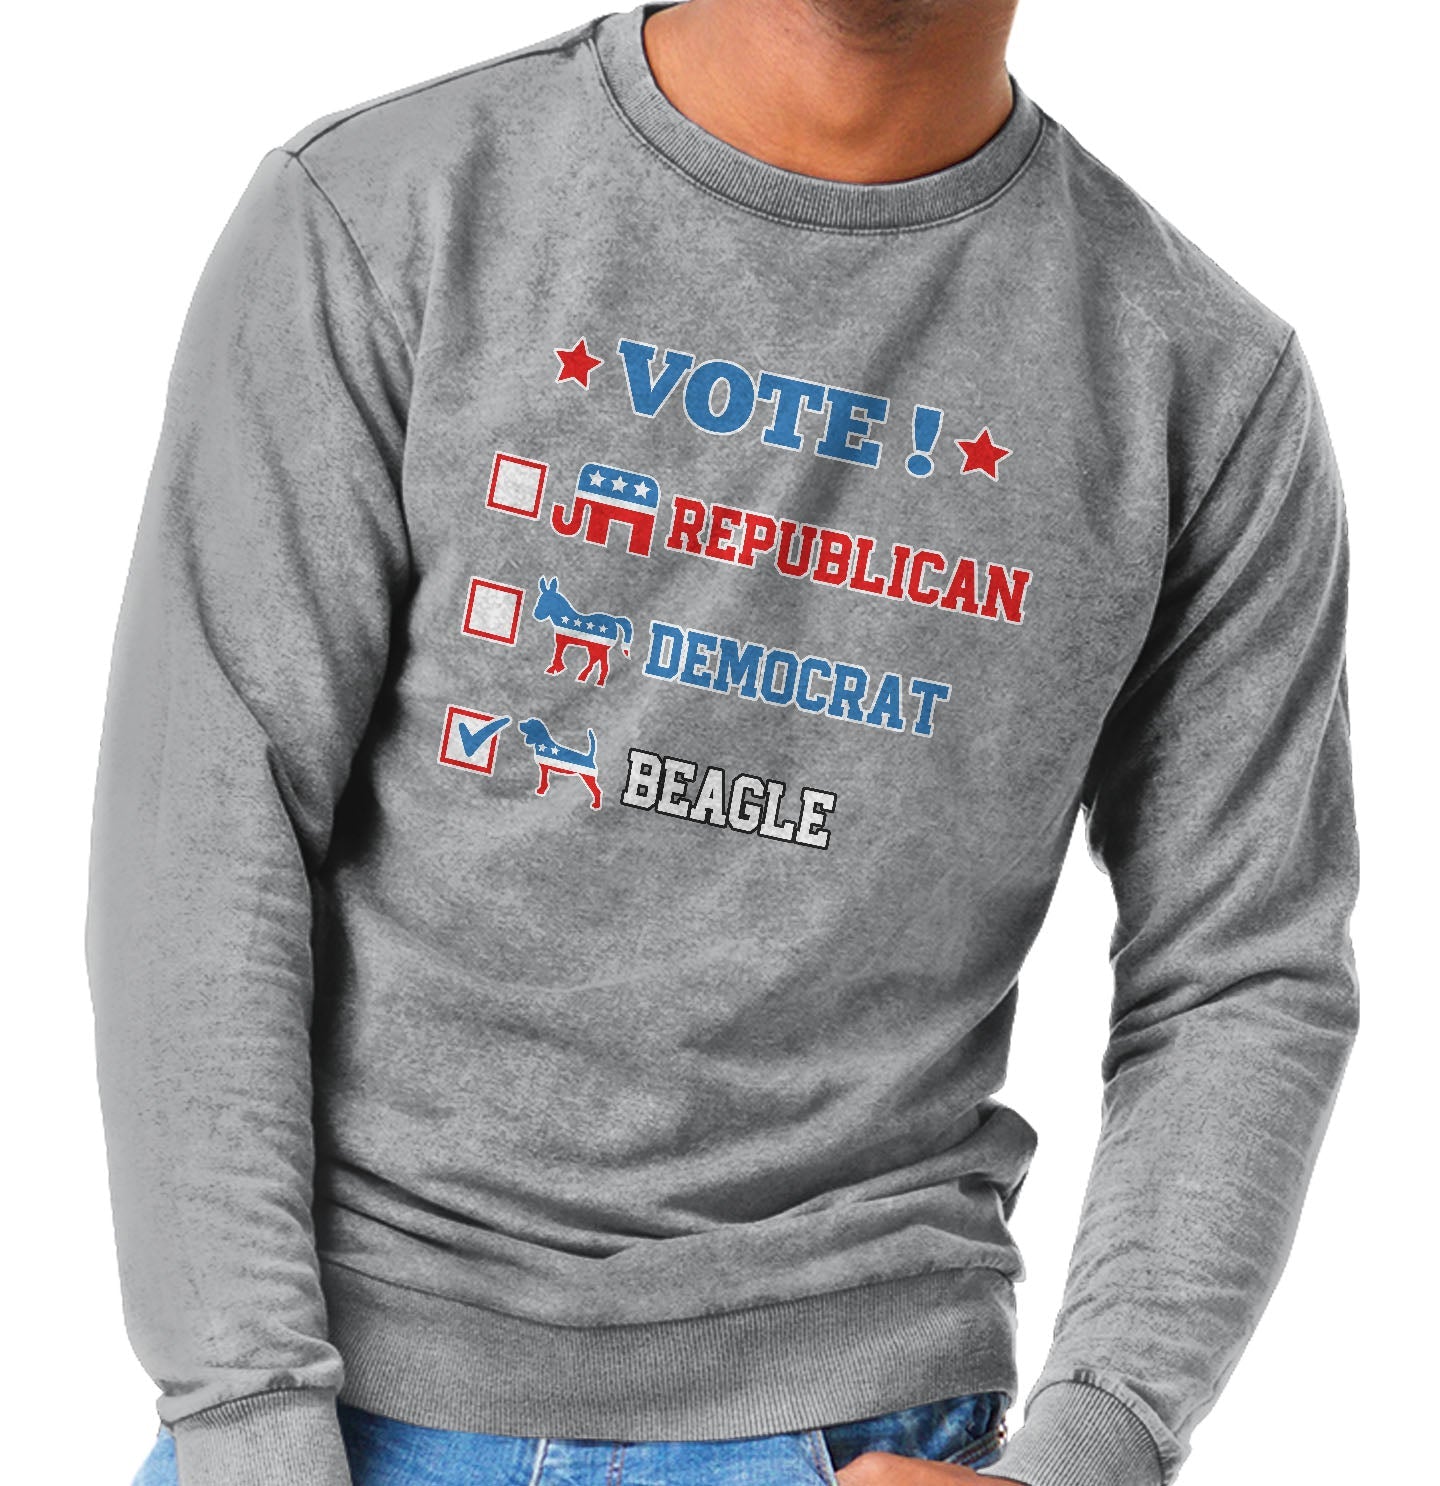 Vote for the Beagle - Adult Unisex Crewneck Sweatshirt